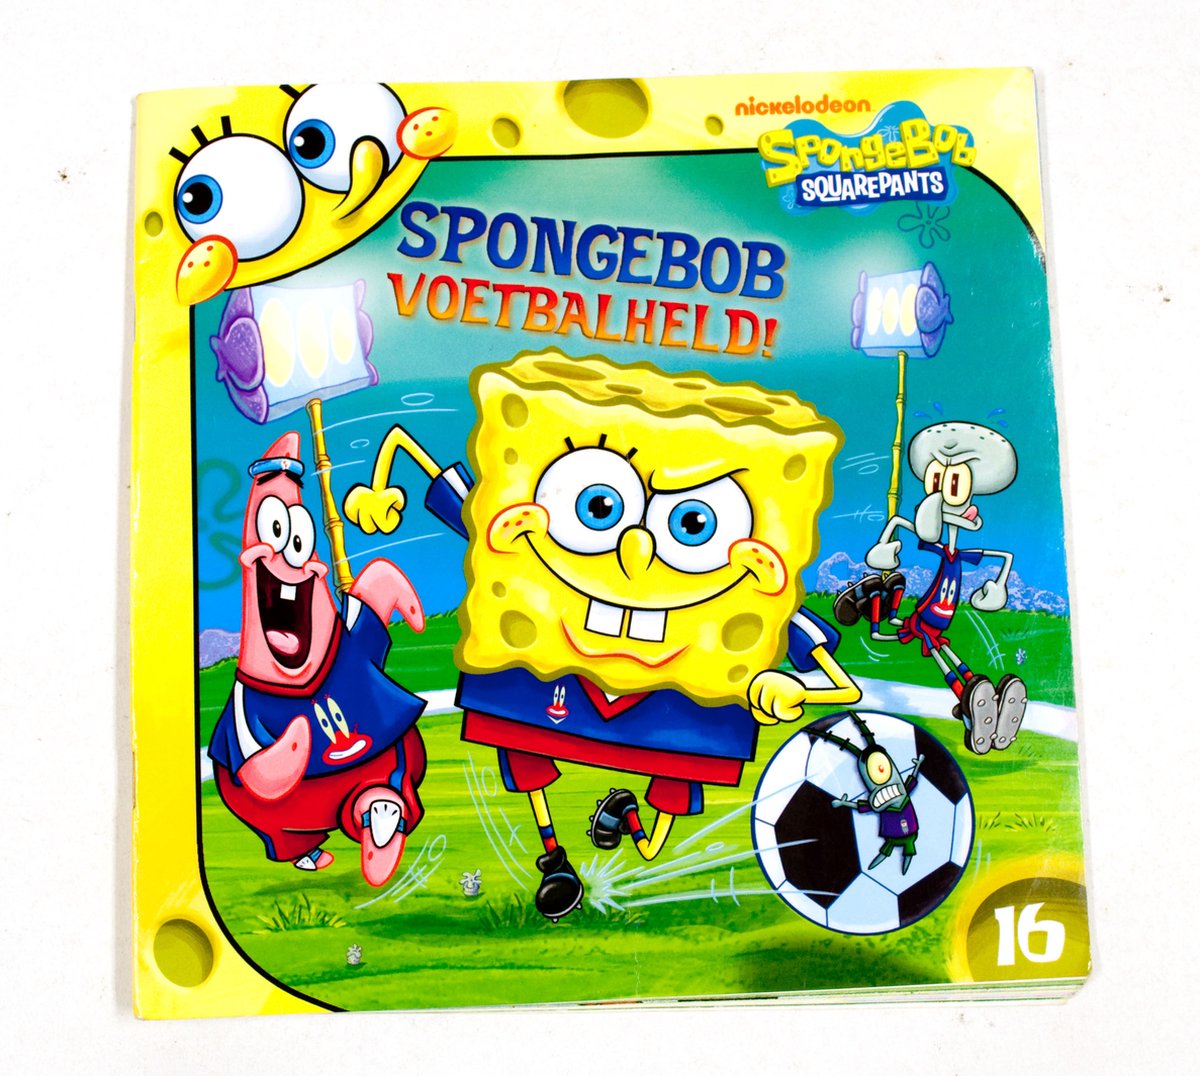 16 Spongebob voetbalheld